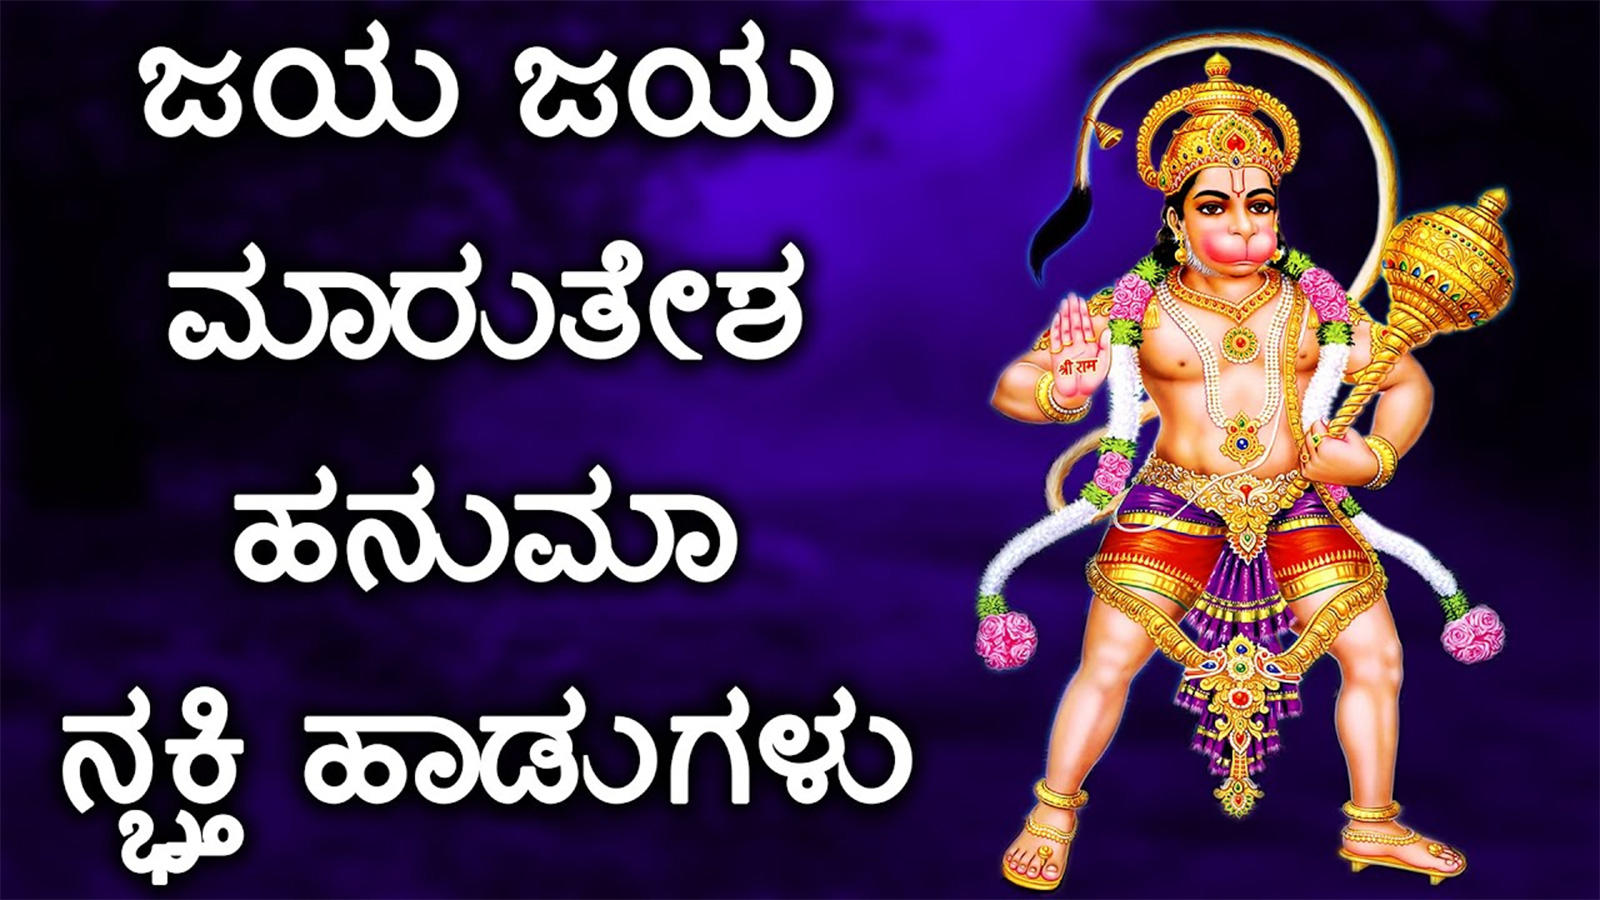 Lord Hanuman Kannada Bhakti Songs   Watch Popular Kannada Devotional Song  'Jaya Marutesha' Jukebox. Popular Kannada Devotional Songs of 20    Kannada Bhakti Songs, Bhajans, and Pooja Aarti Songs